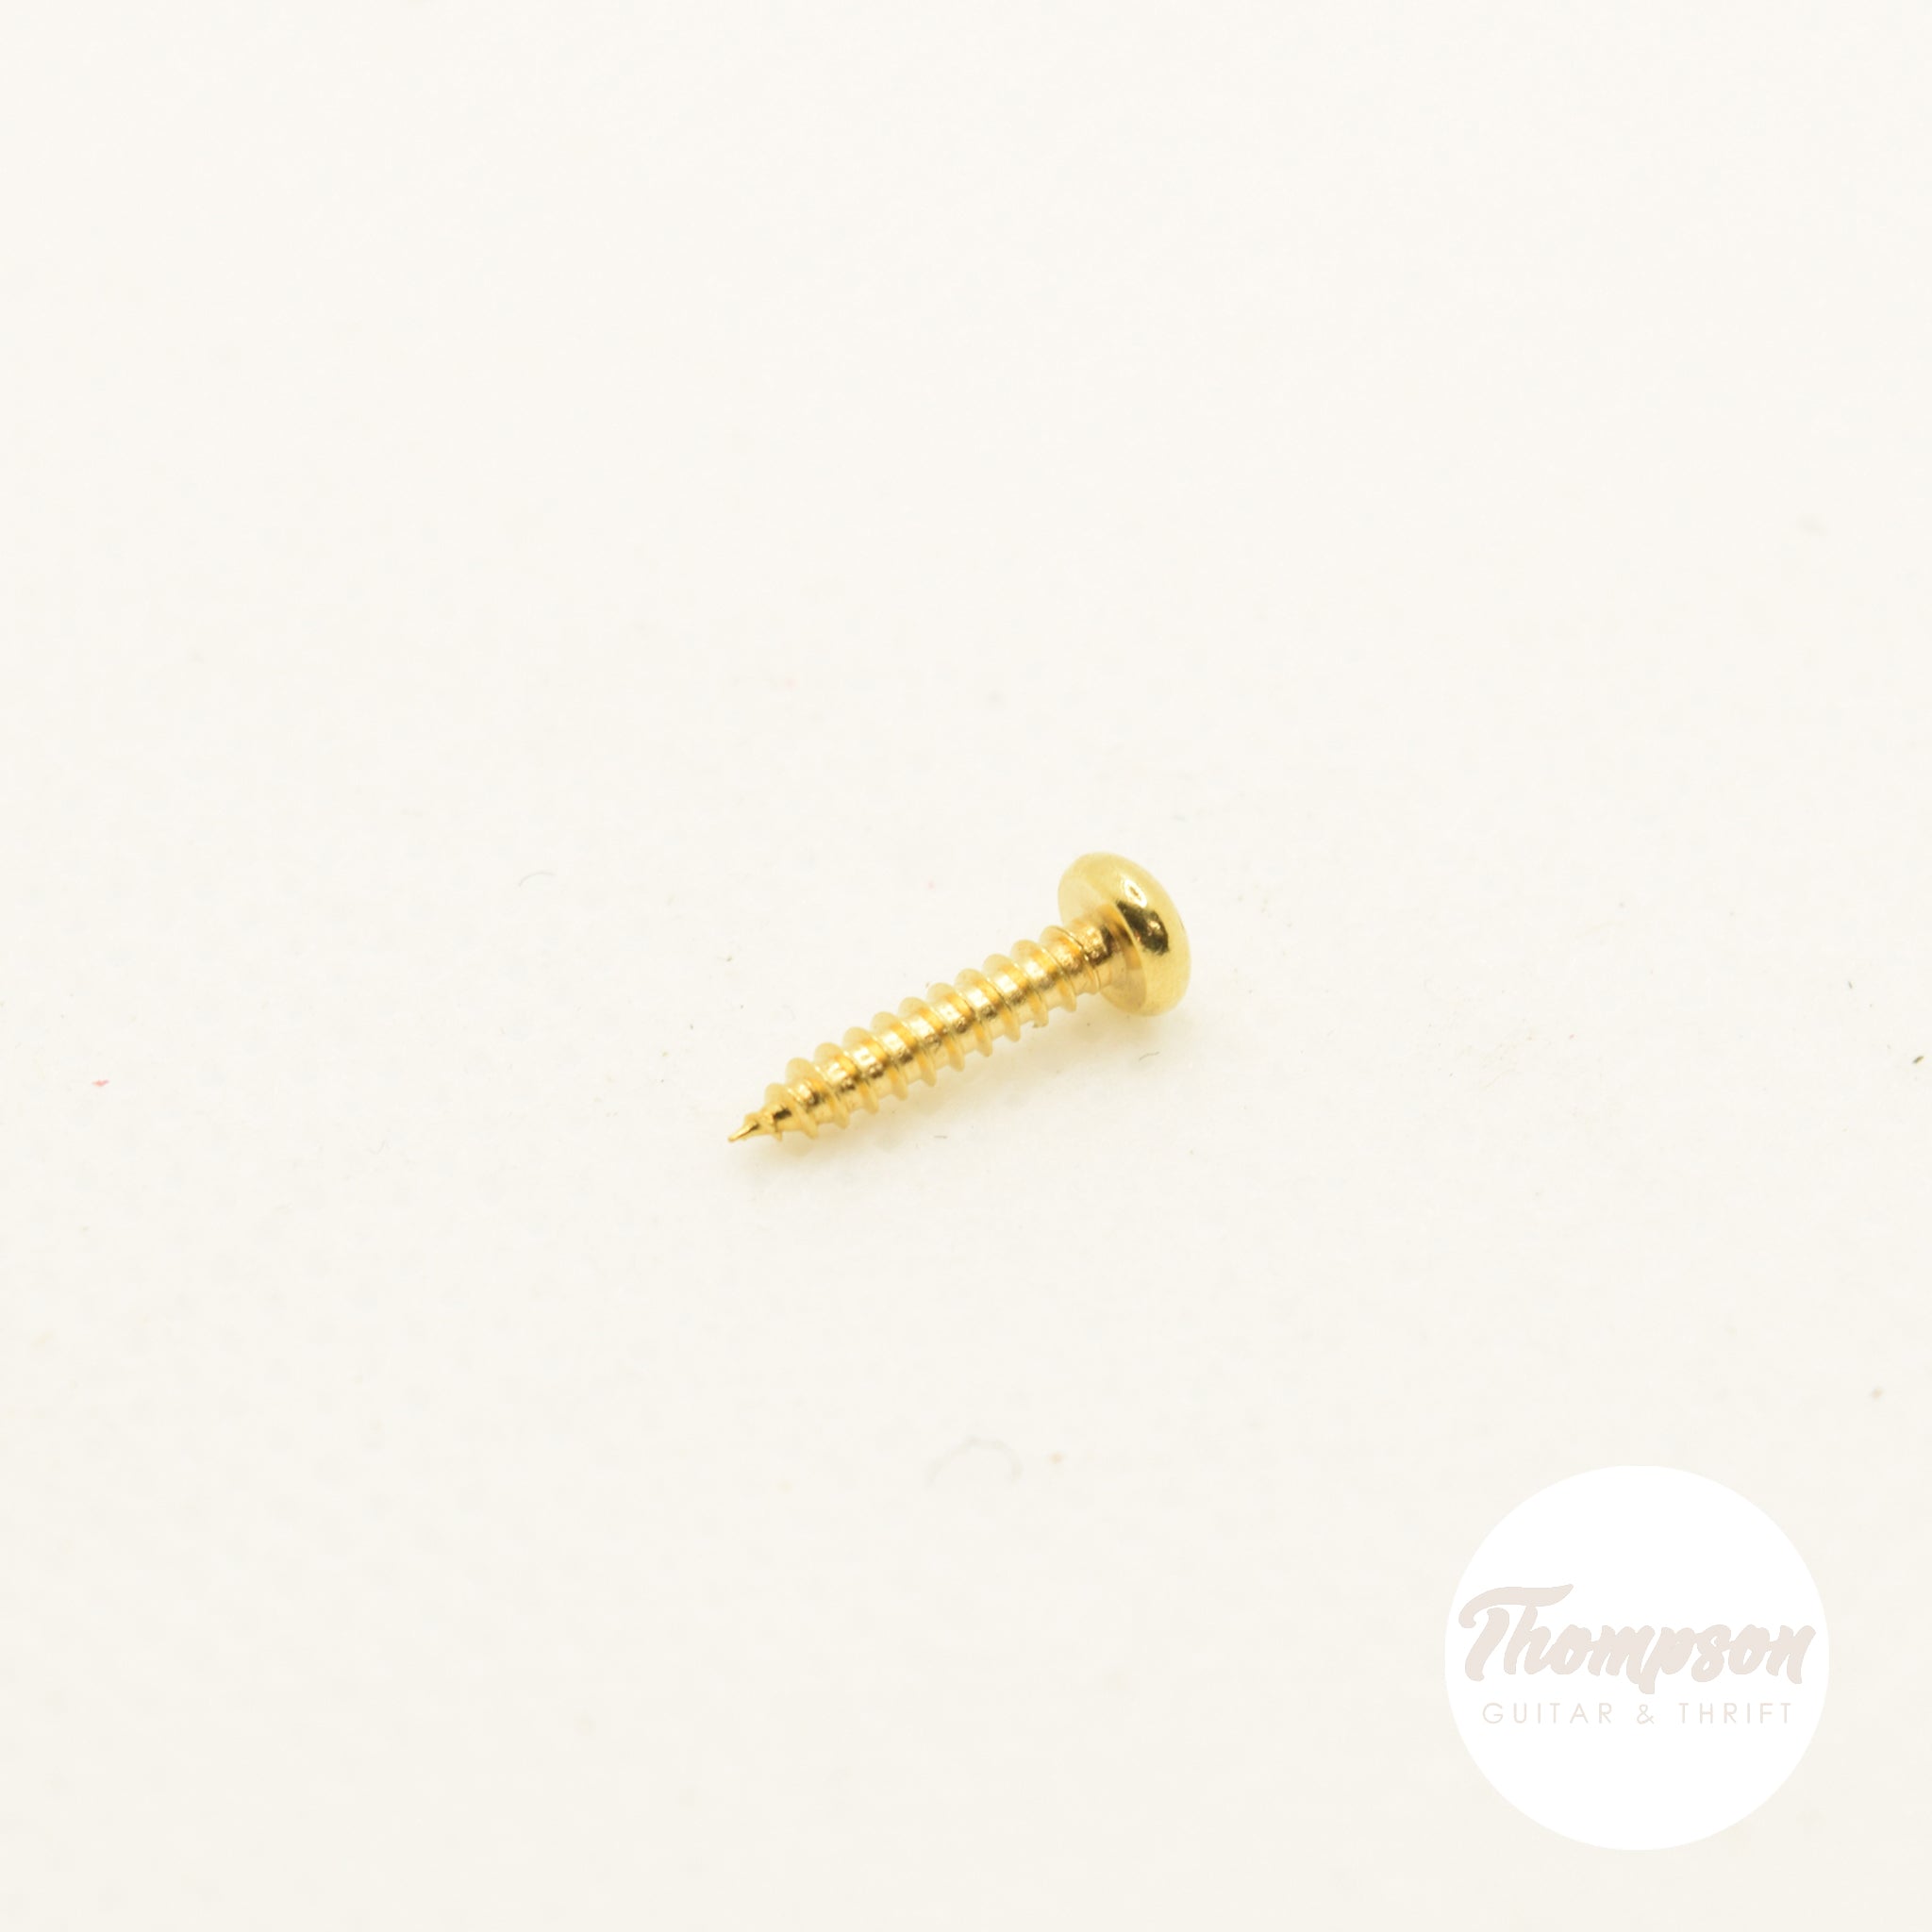 Gold Steel Tuner Screws 2mm x 9.5mm Set of 12